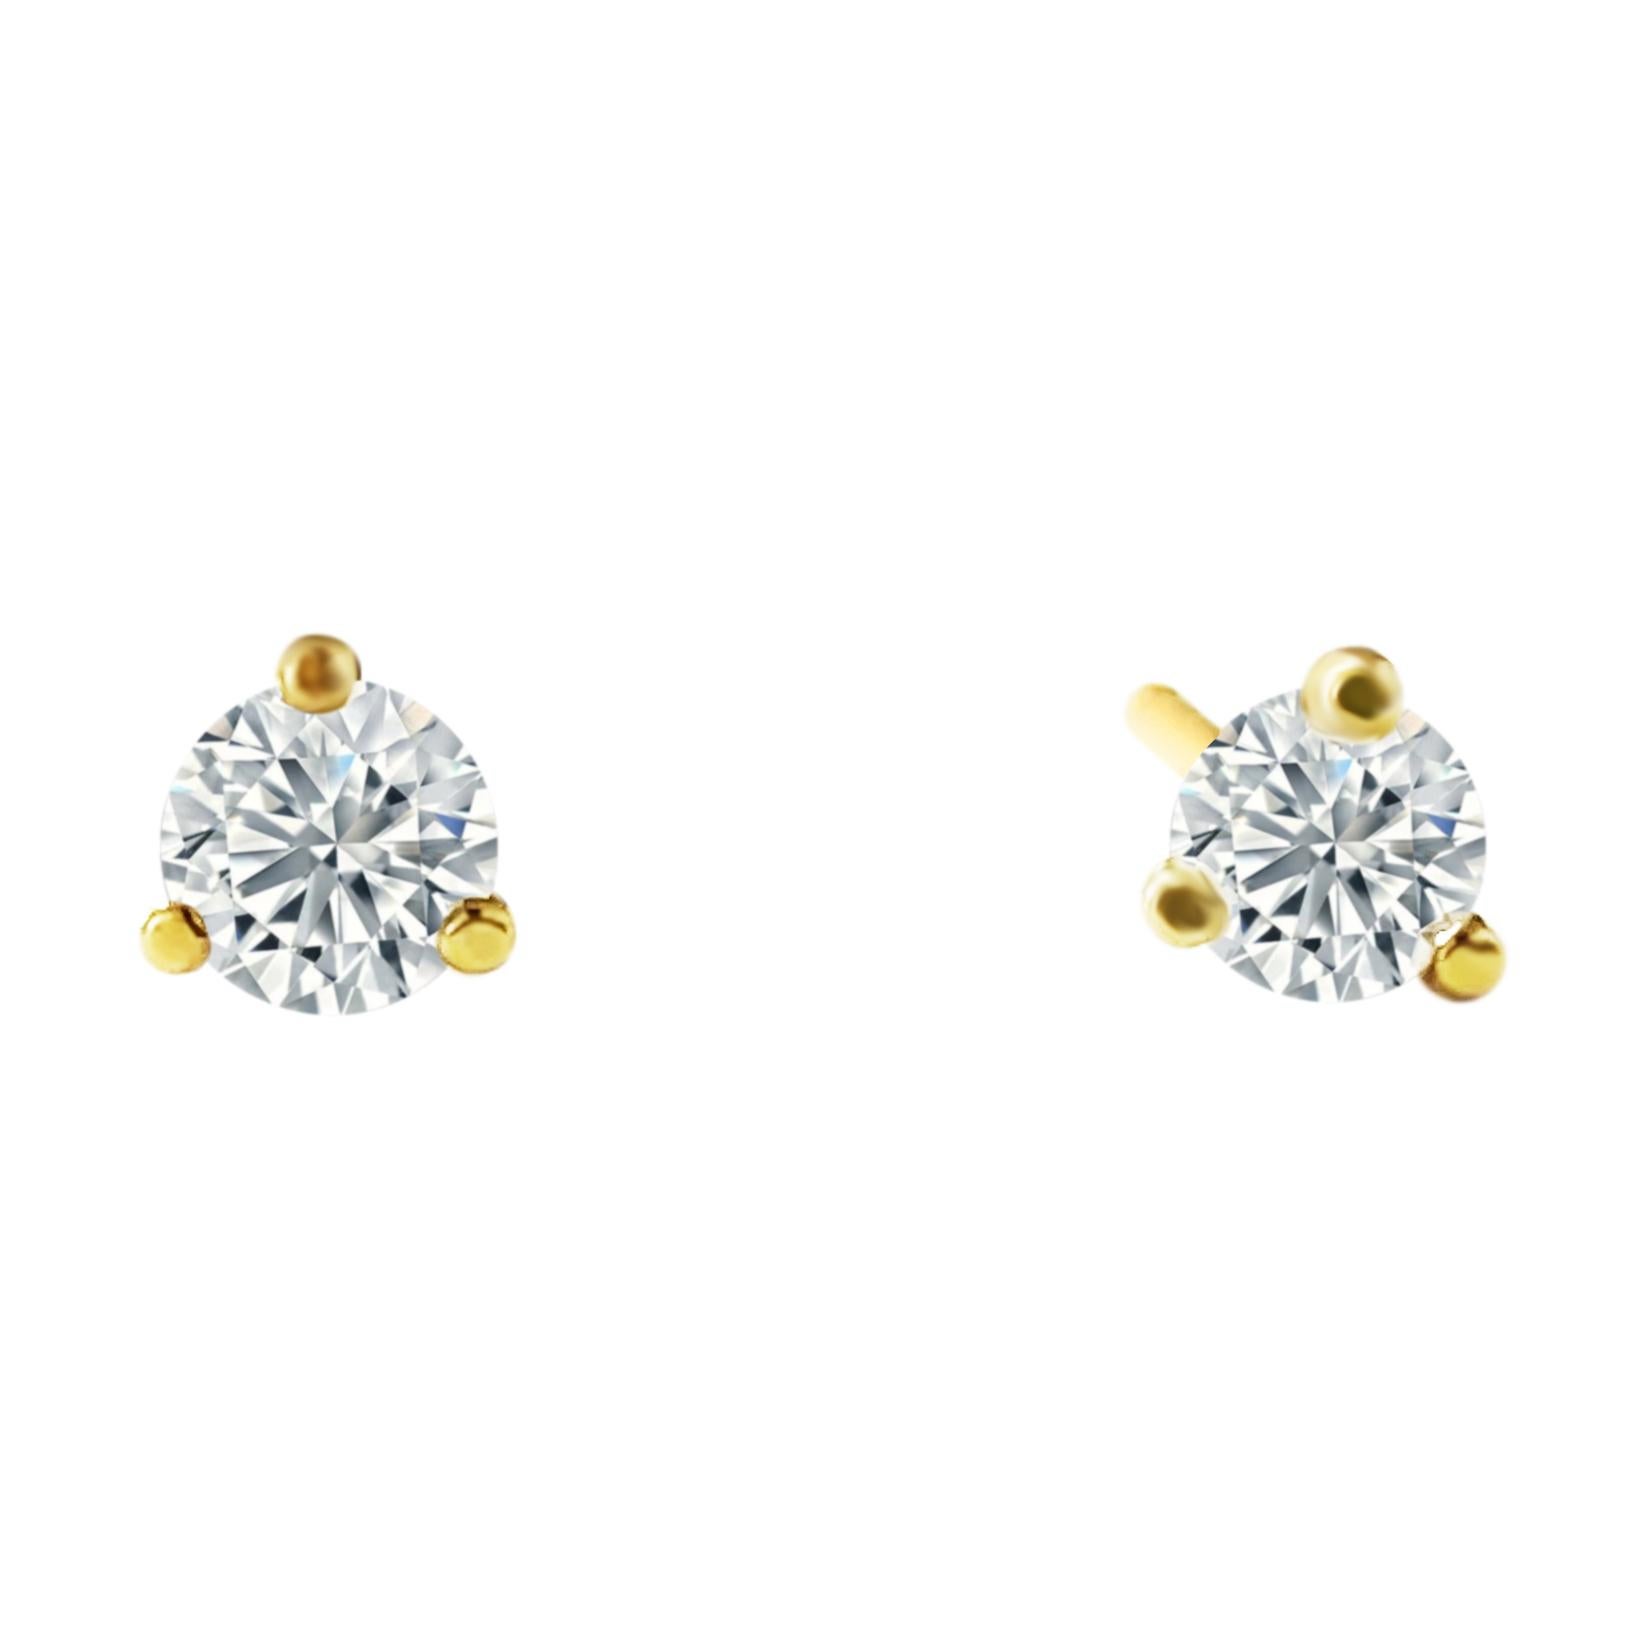 30 Carat Diamond Stud Earrings 14K Yellow Gold